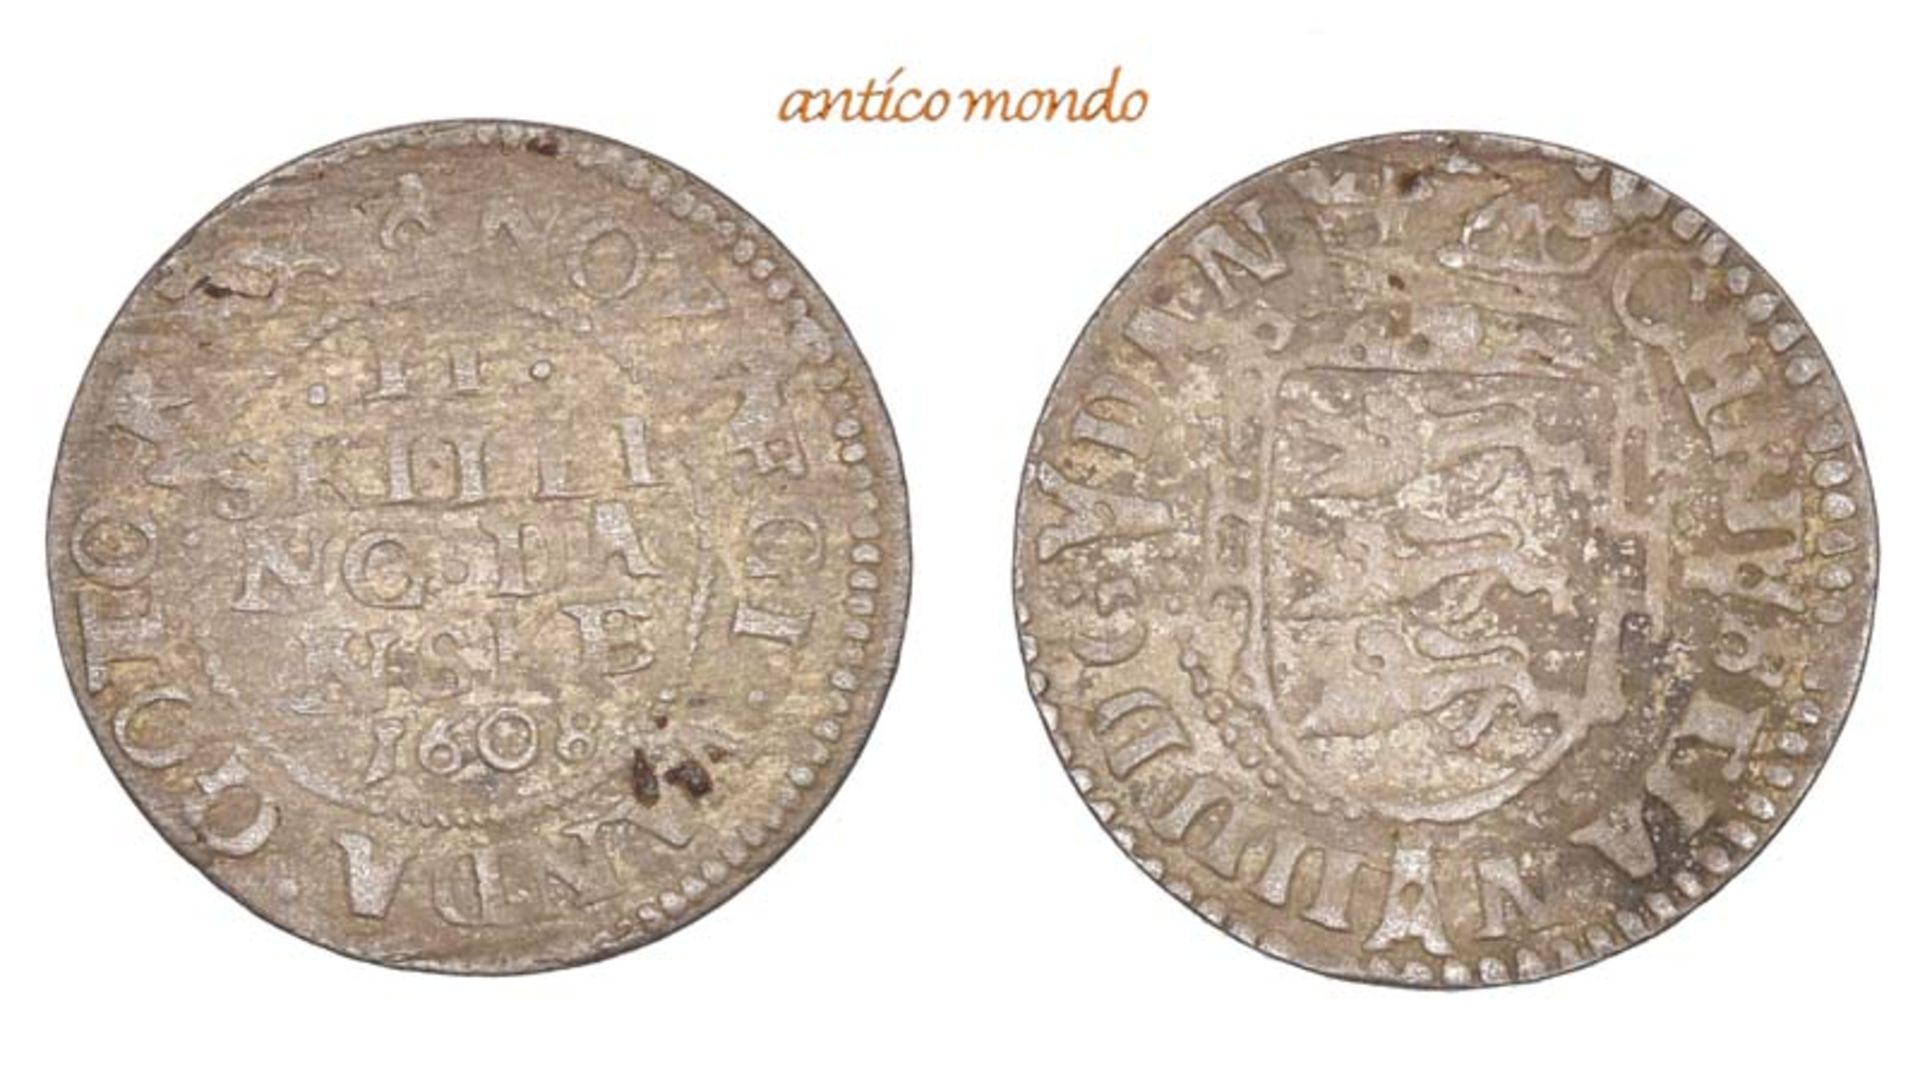 Dänemark, Christian IV., 1588-1648, 2 Skilling, 1608, sehr schön, 1,85 g- - -21.50 % buyer's premium